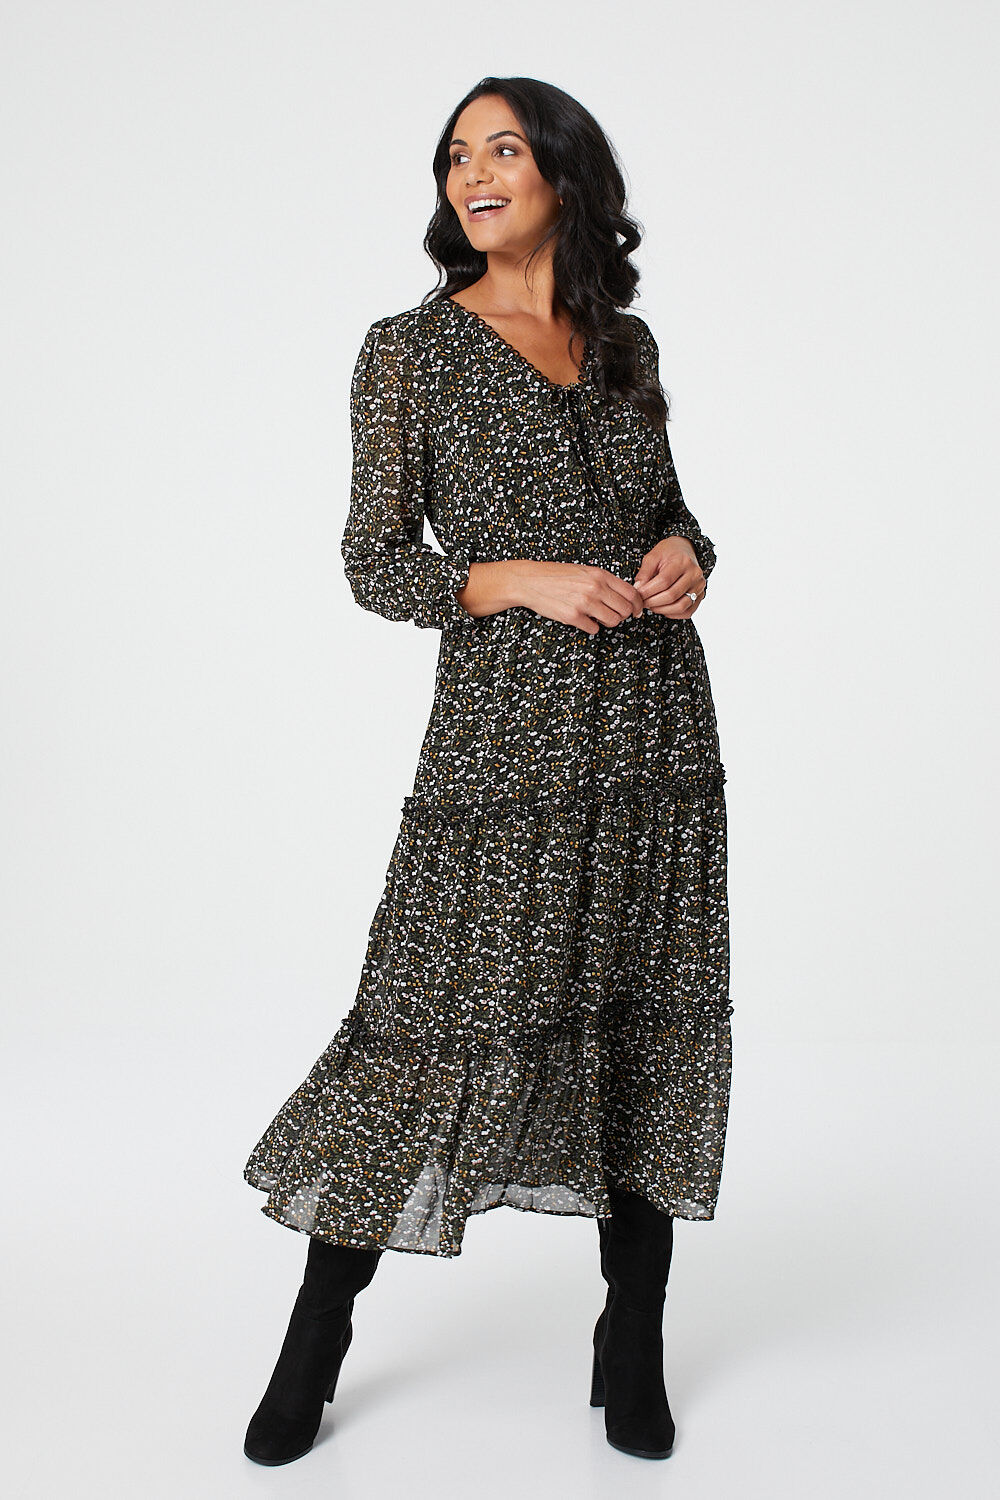 Izabel London Black - Floral Tie Front Tiered Midi Dress, Size: 14